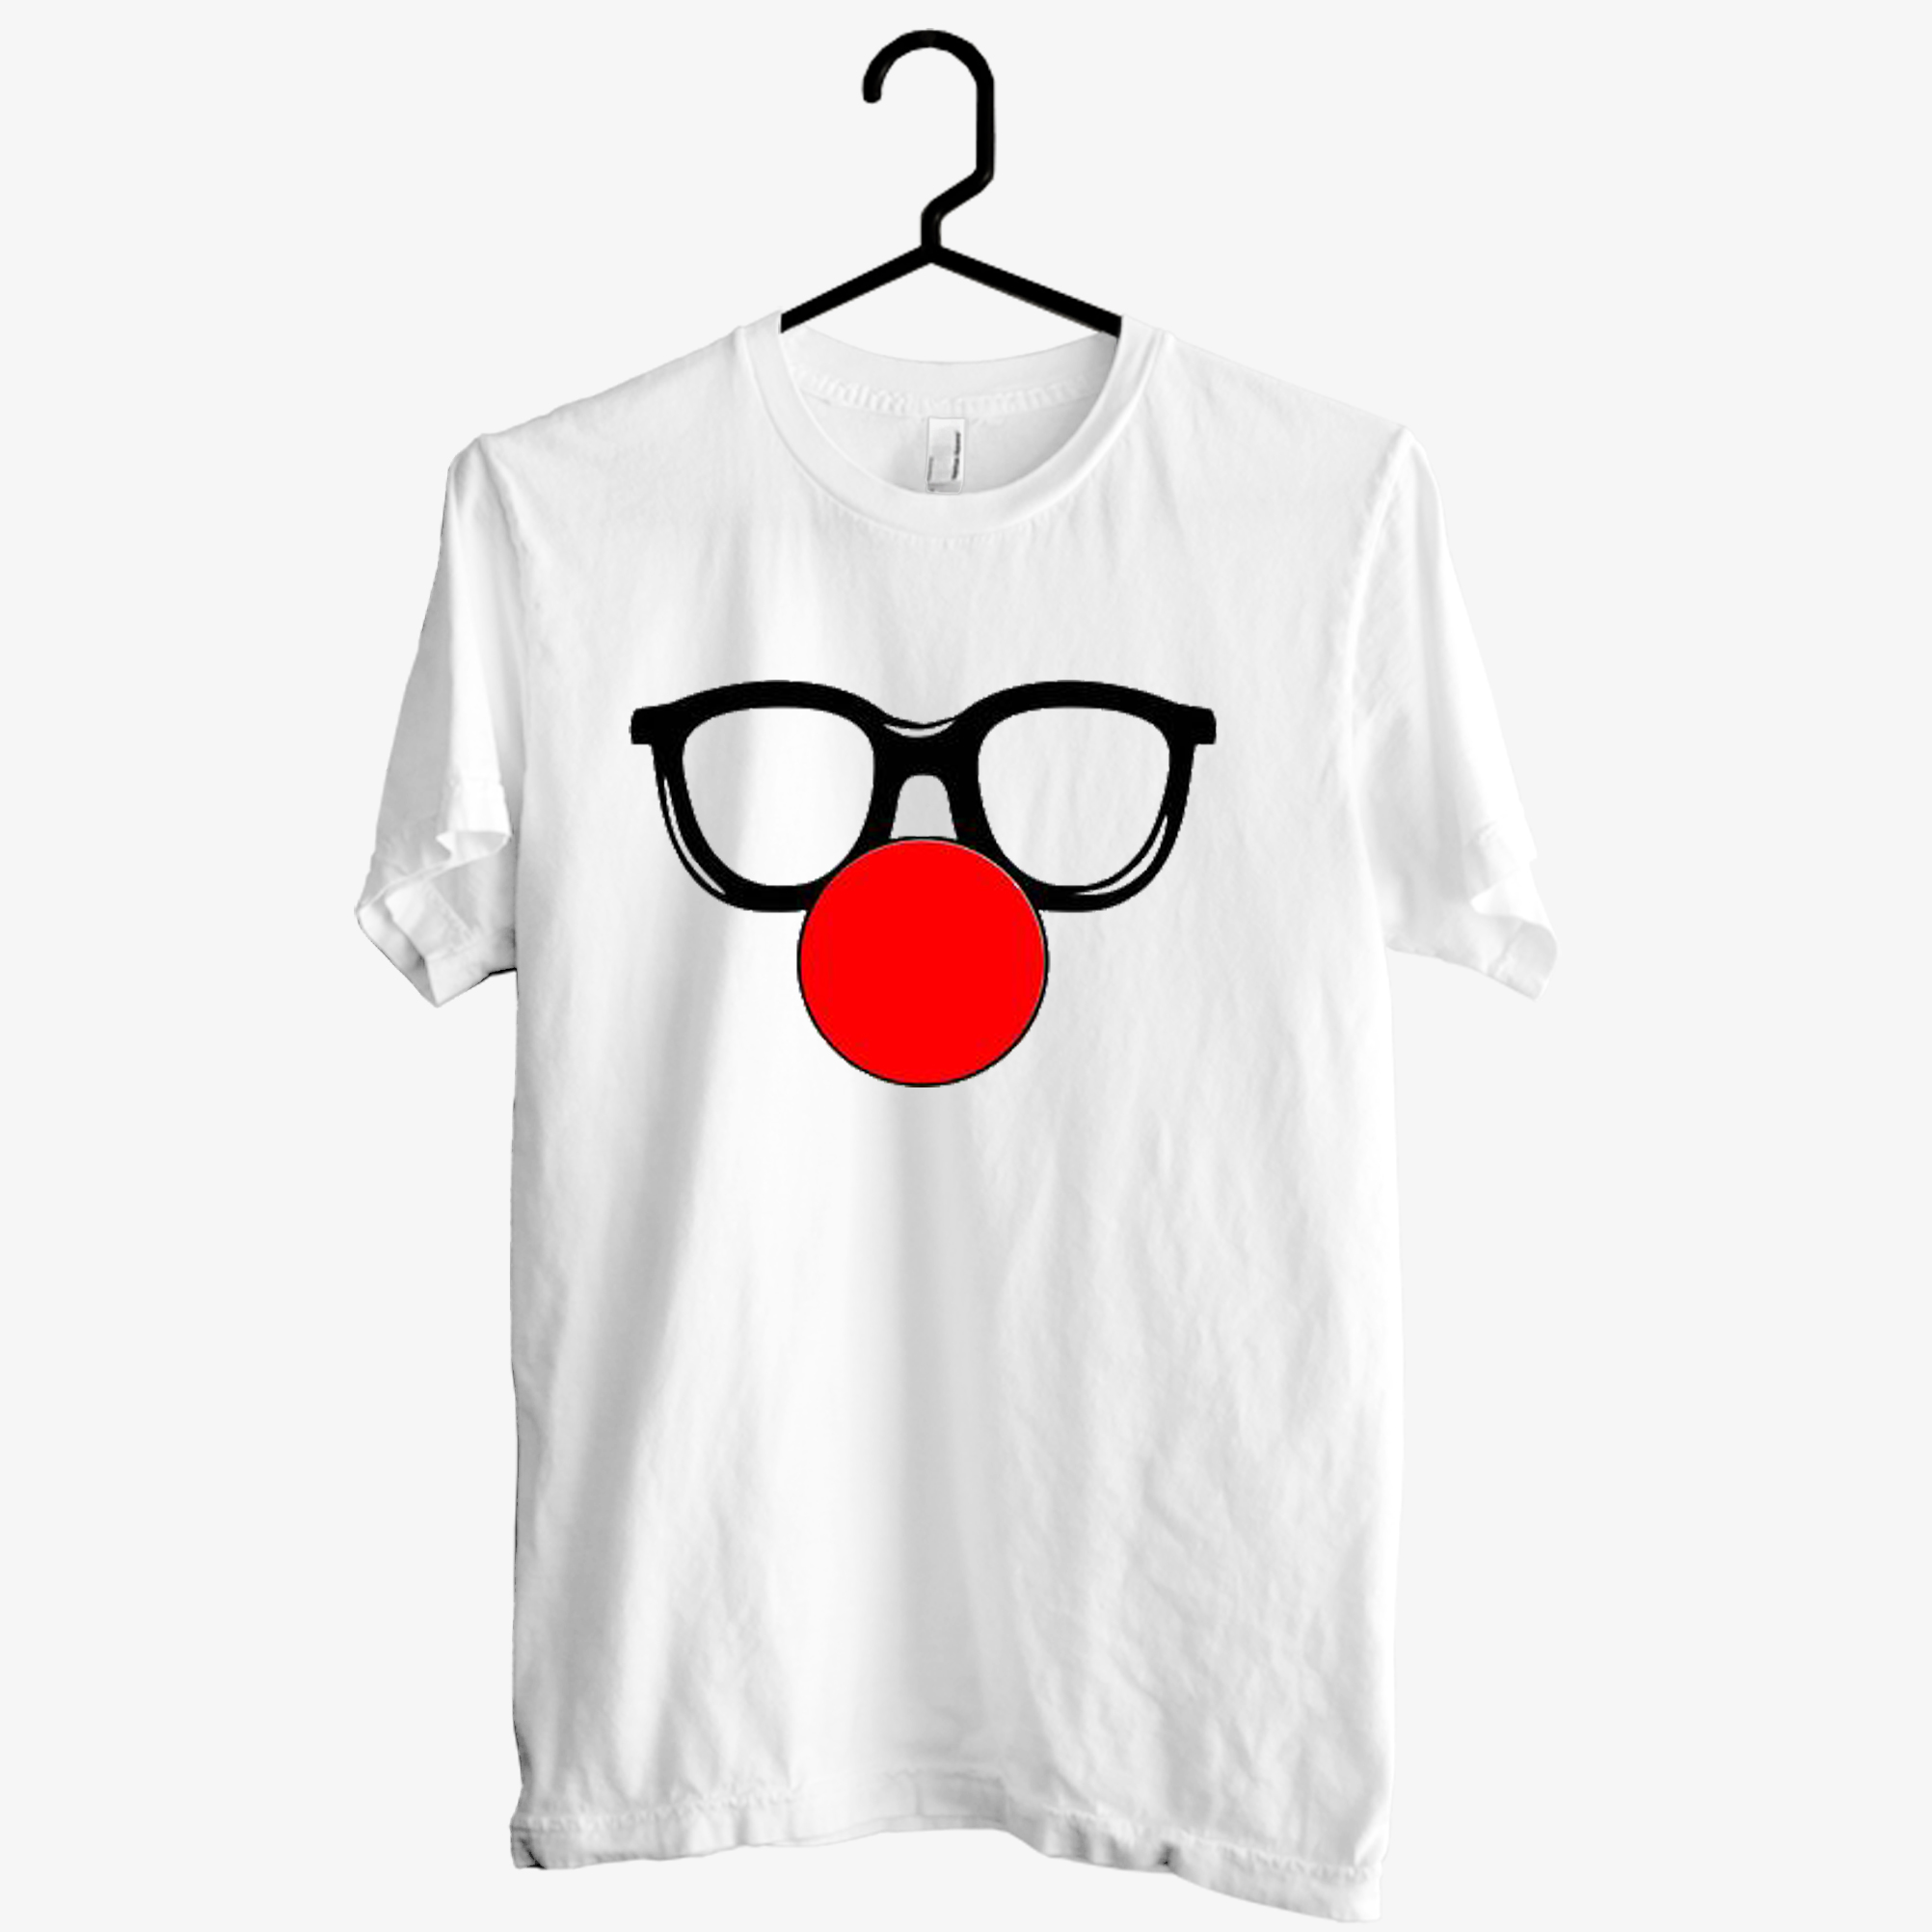 Clown Glasses T shirt